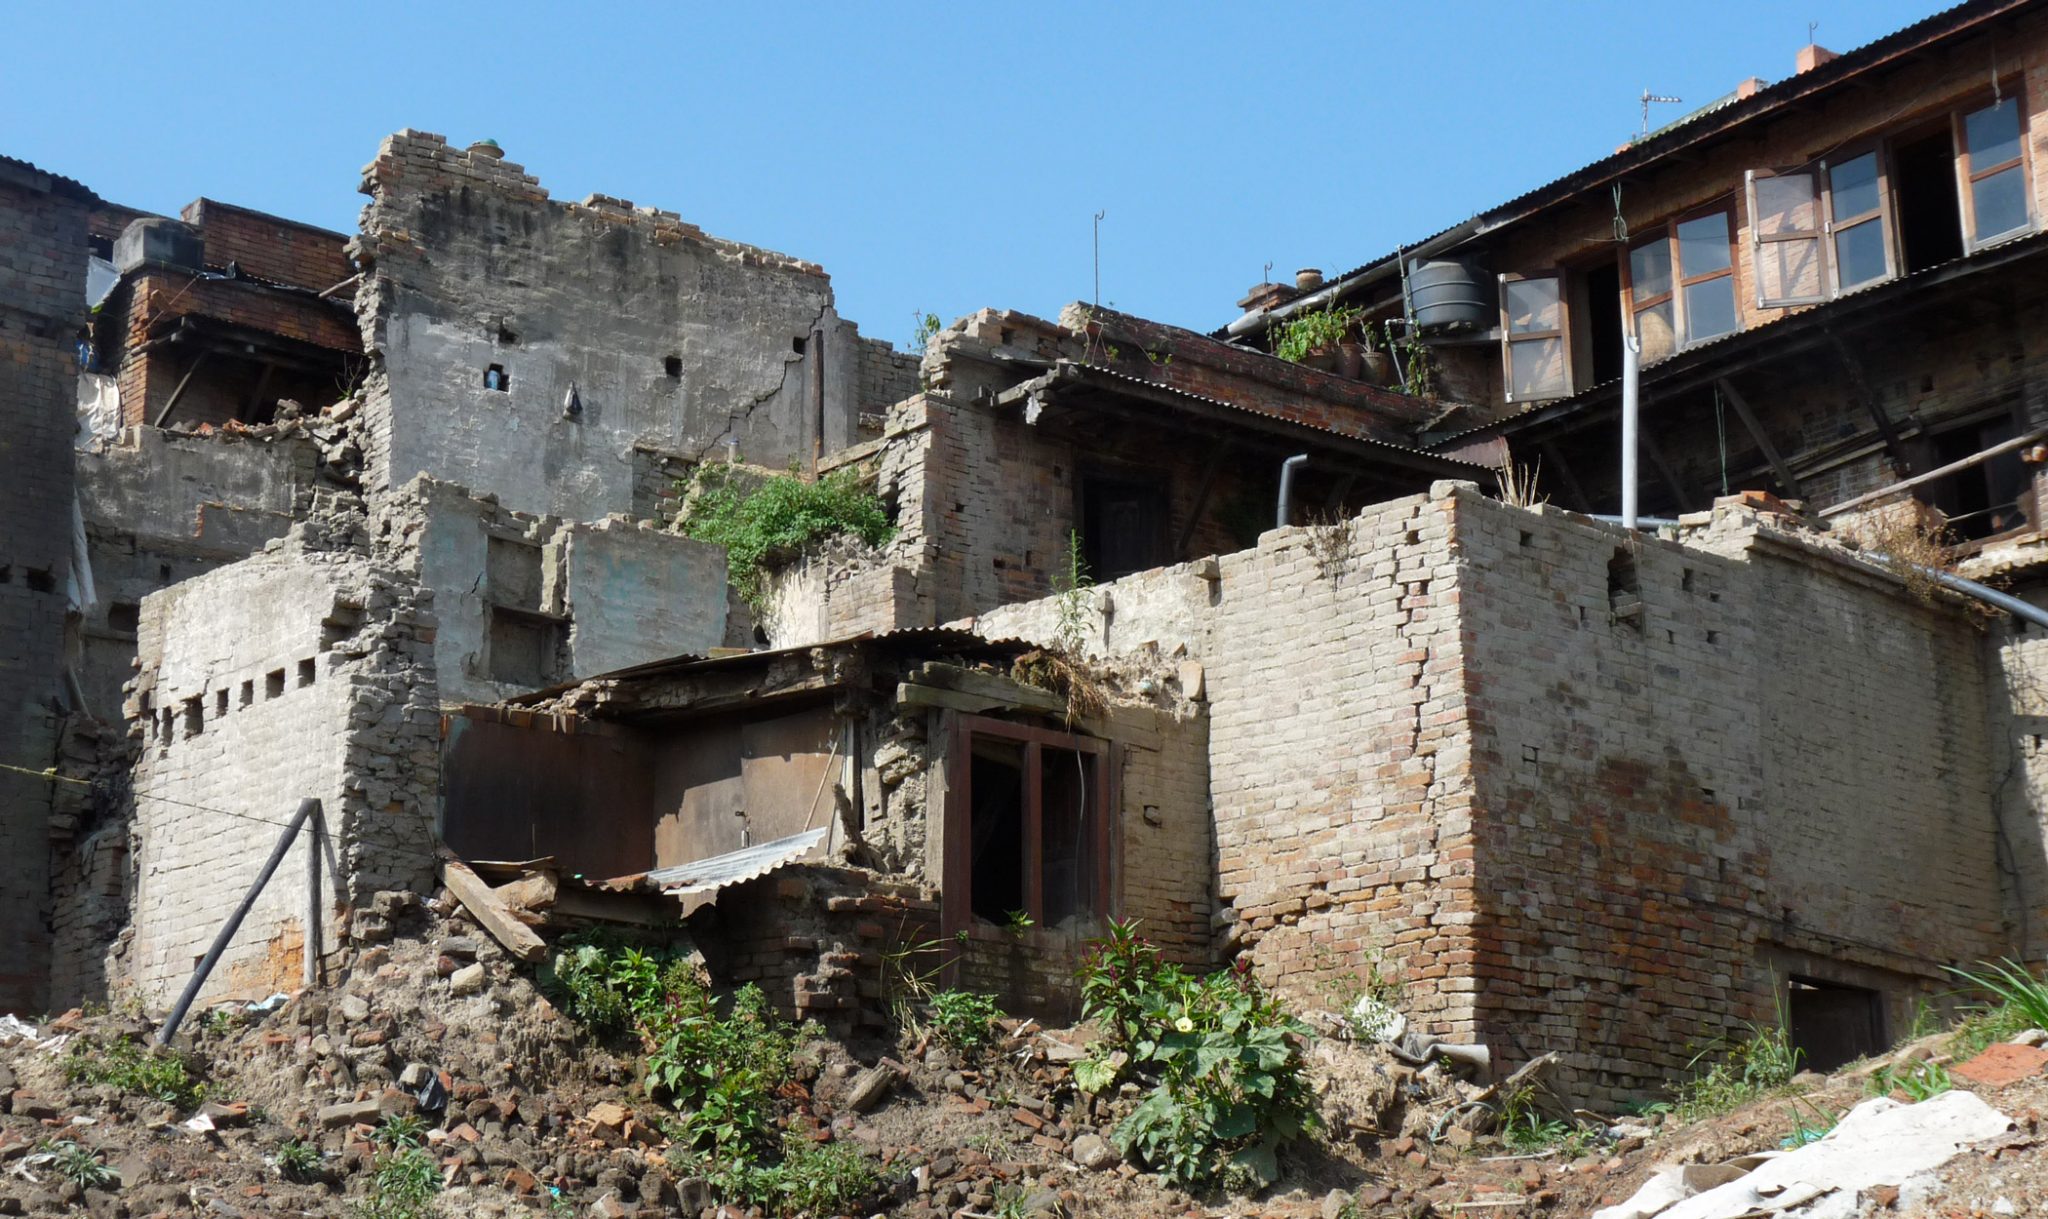 Ruins of people's homes